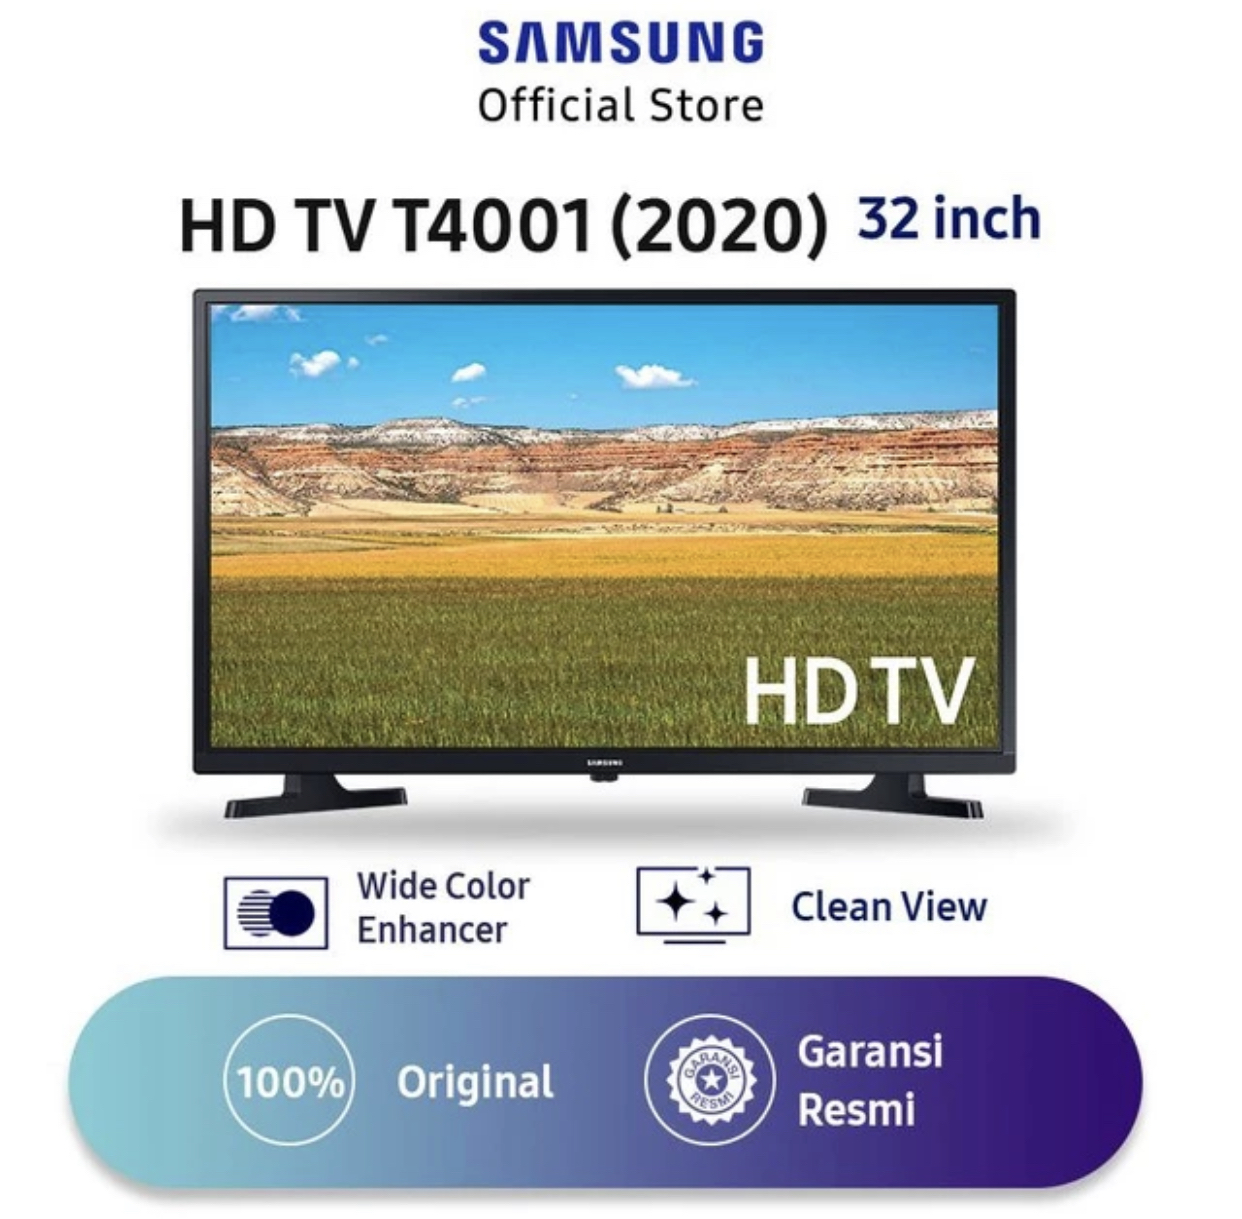 3.13 . Samsung HD TV T4001